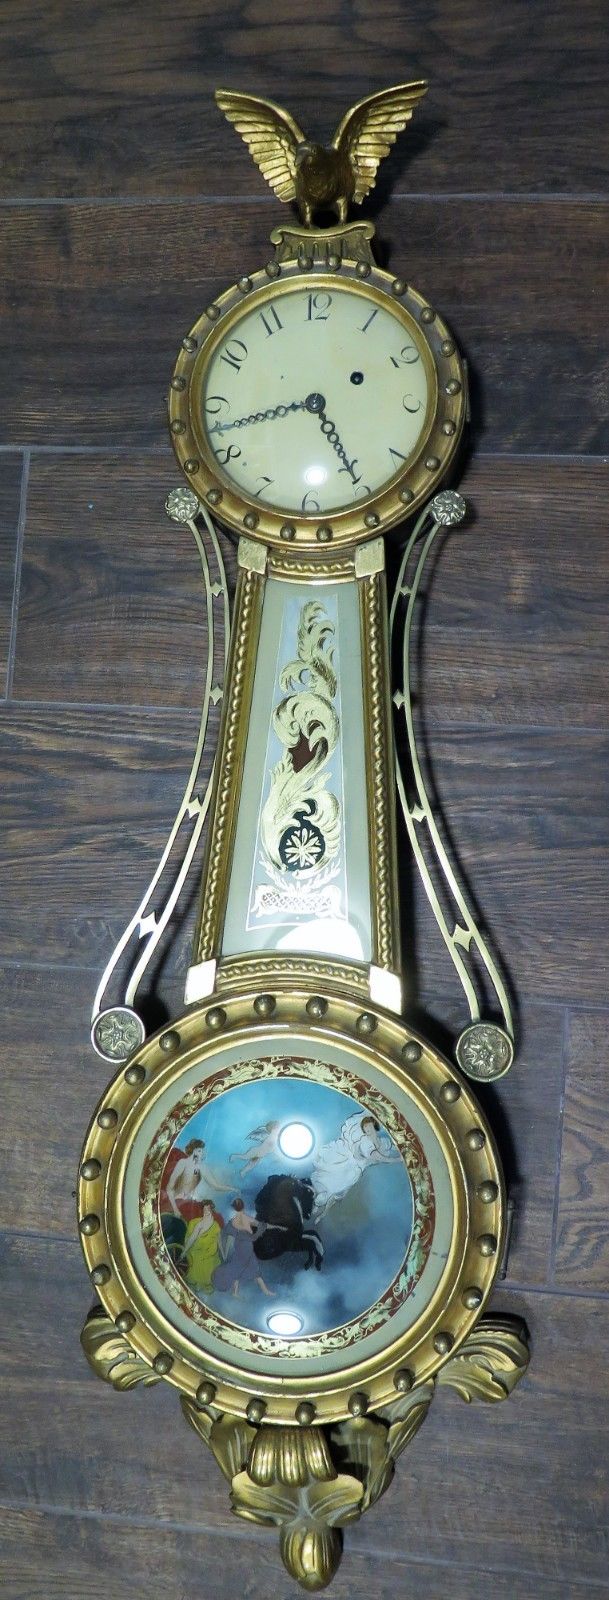 ANTIQUE GILT GIRANDOLE BANJO CLOCK 1900-1920'S